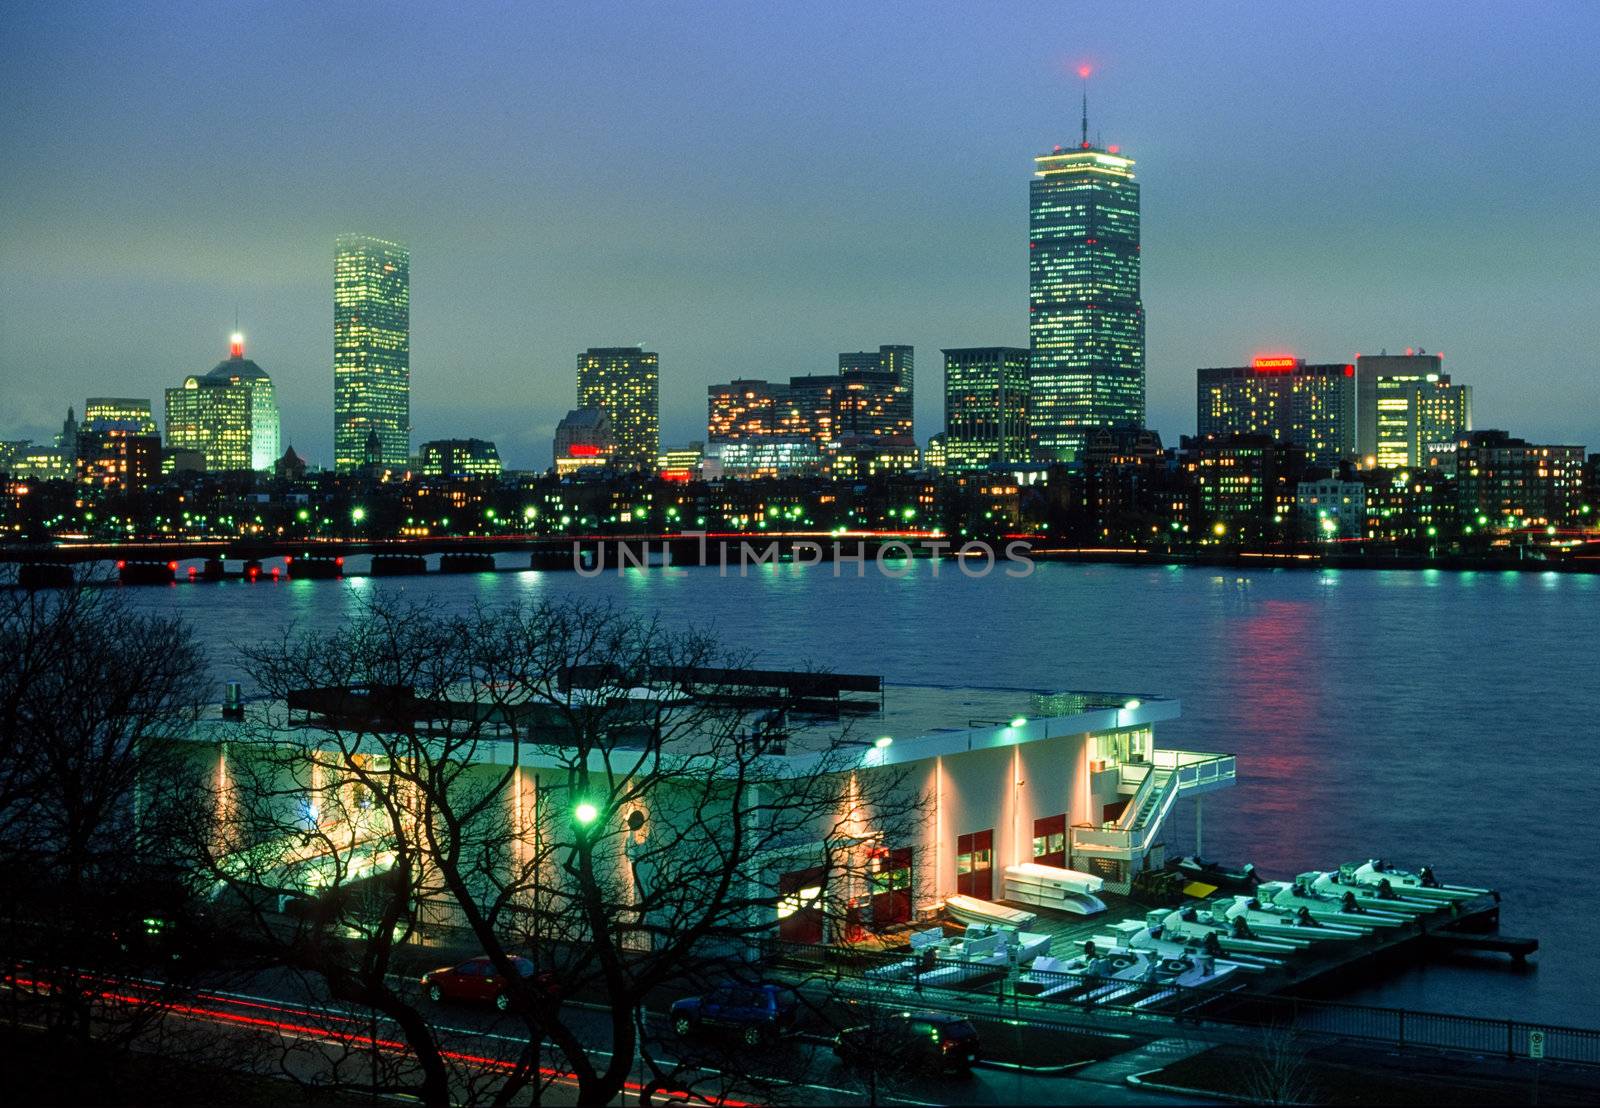 Boston skyline and MIT boathouse by edan